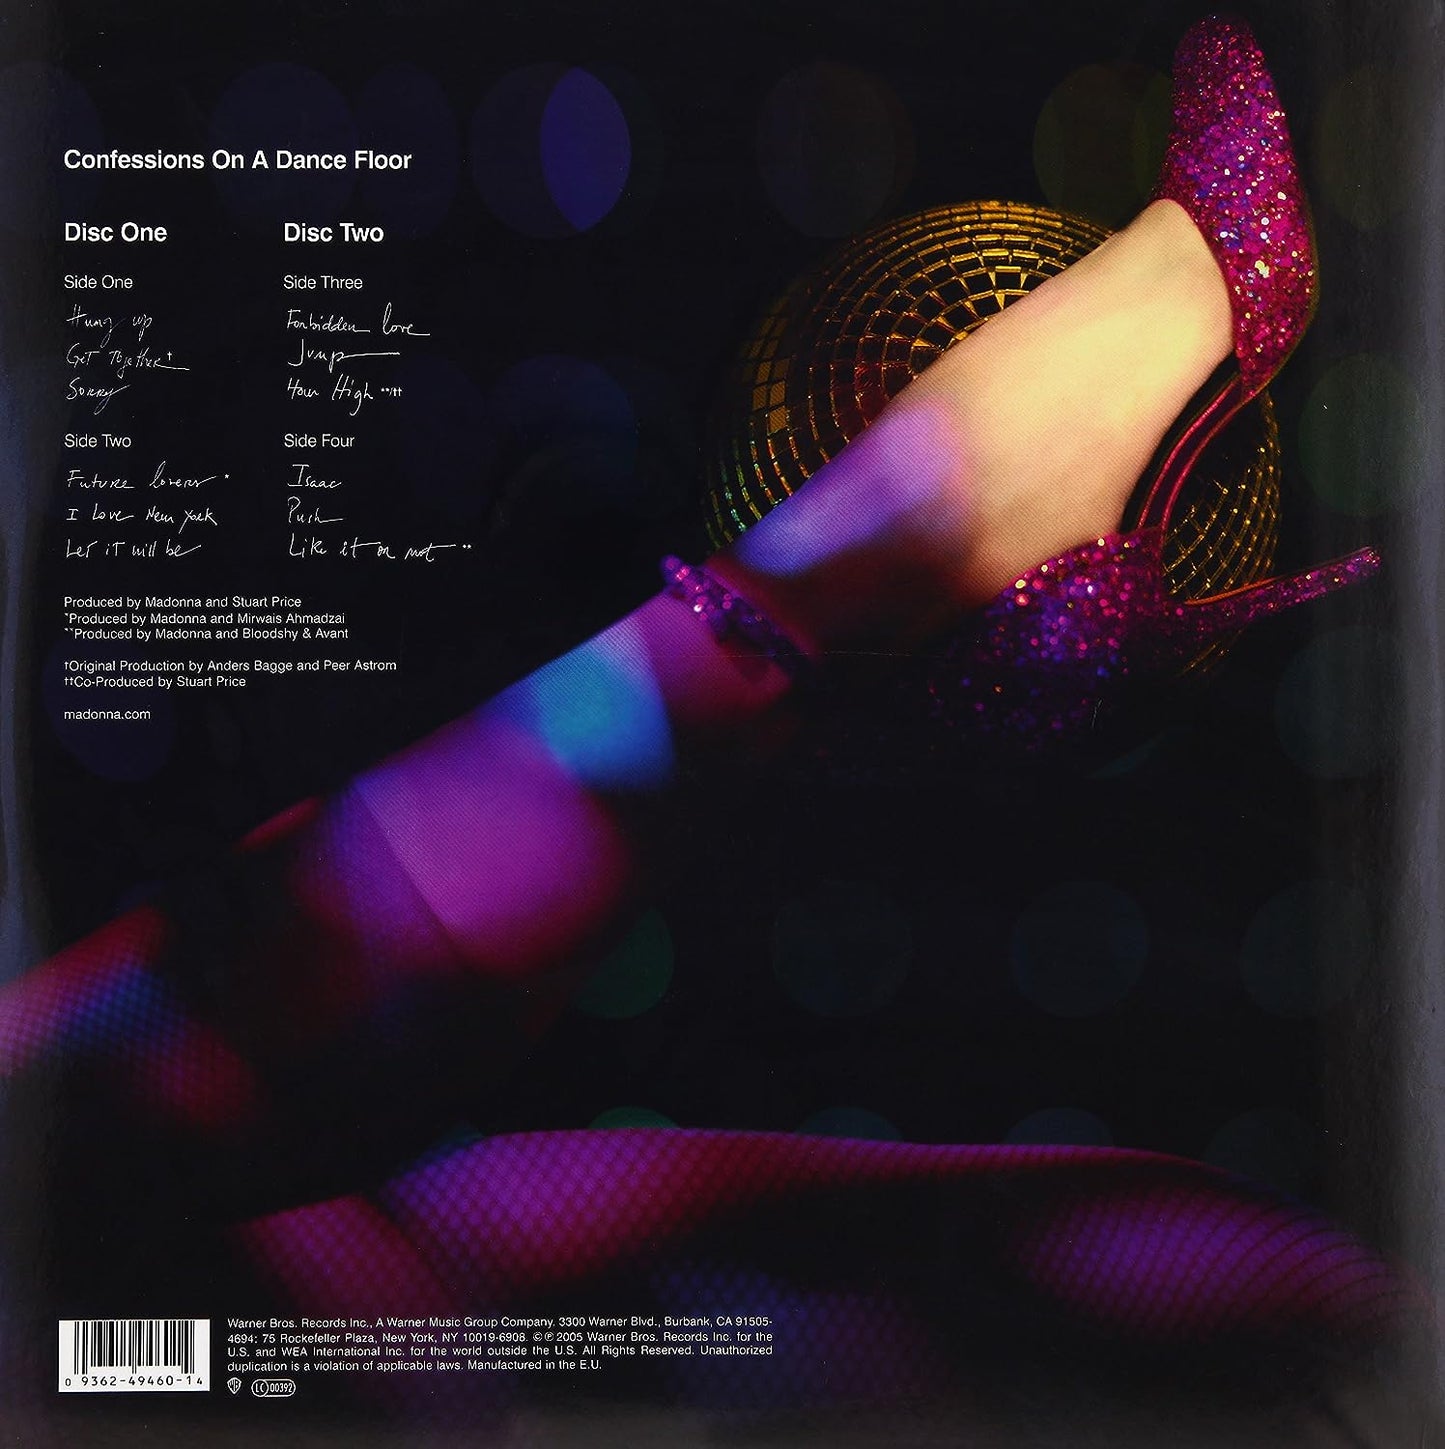 Madonna - Confessions On A Dancefloor (Limited Edition Import, Pink Vinyl) (LP) - Joco Records